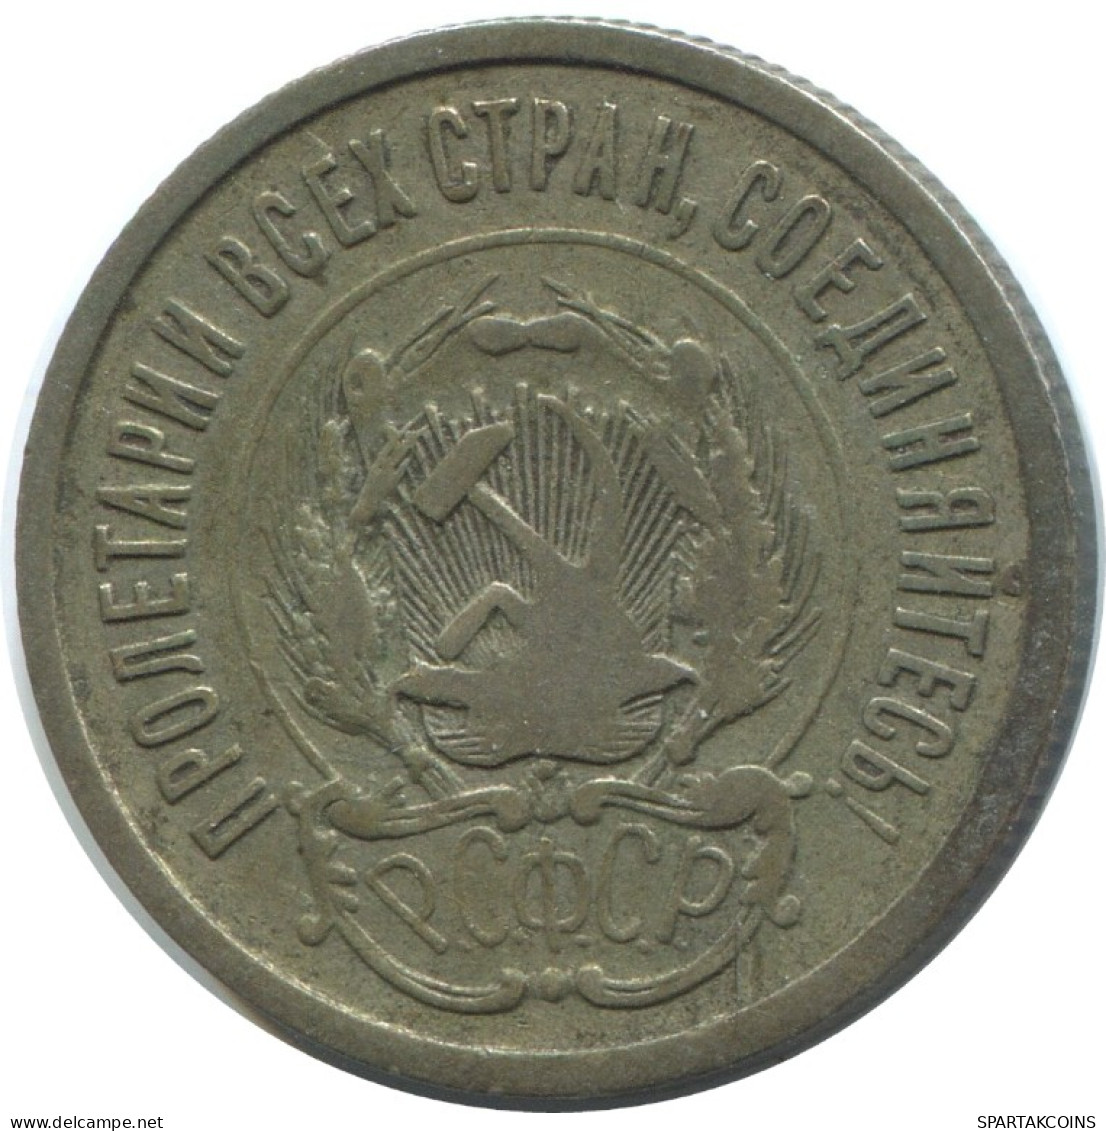 20 KOPEKS 1923 RUSSIA RSFSR SILVER Coin HIGH GRADE #AF422.4.U.A - Russia